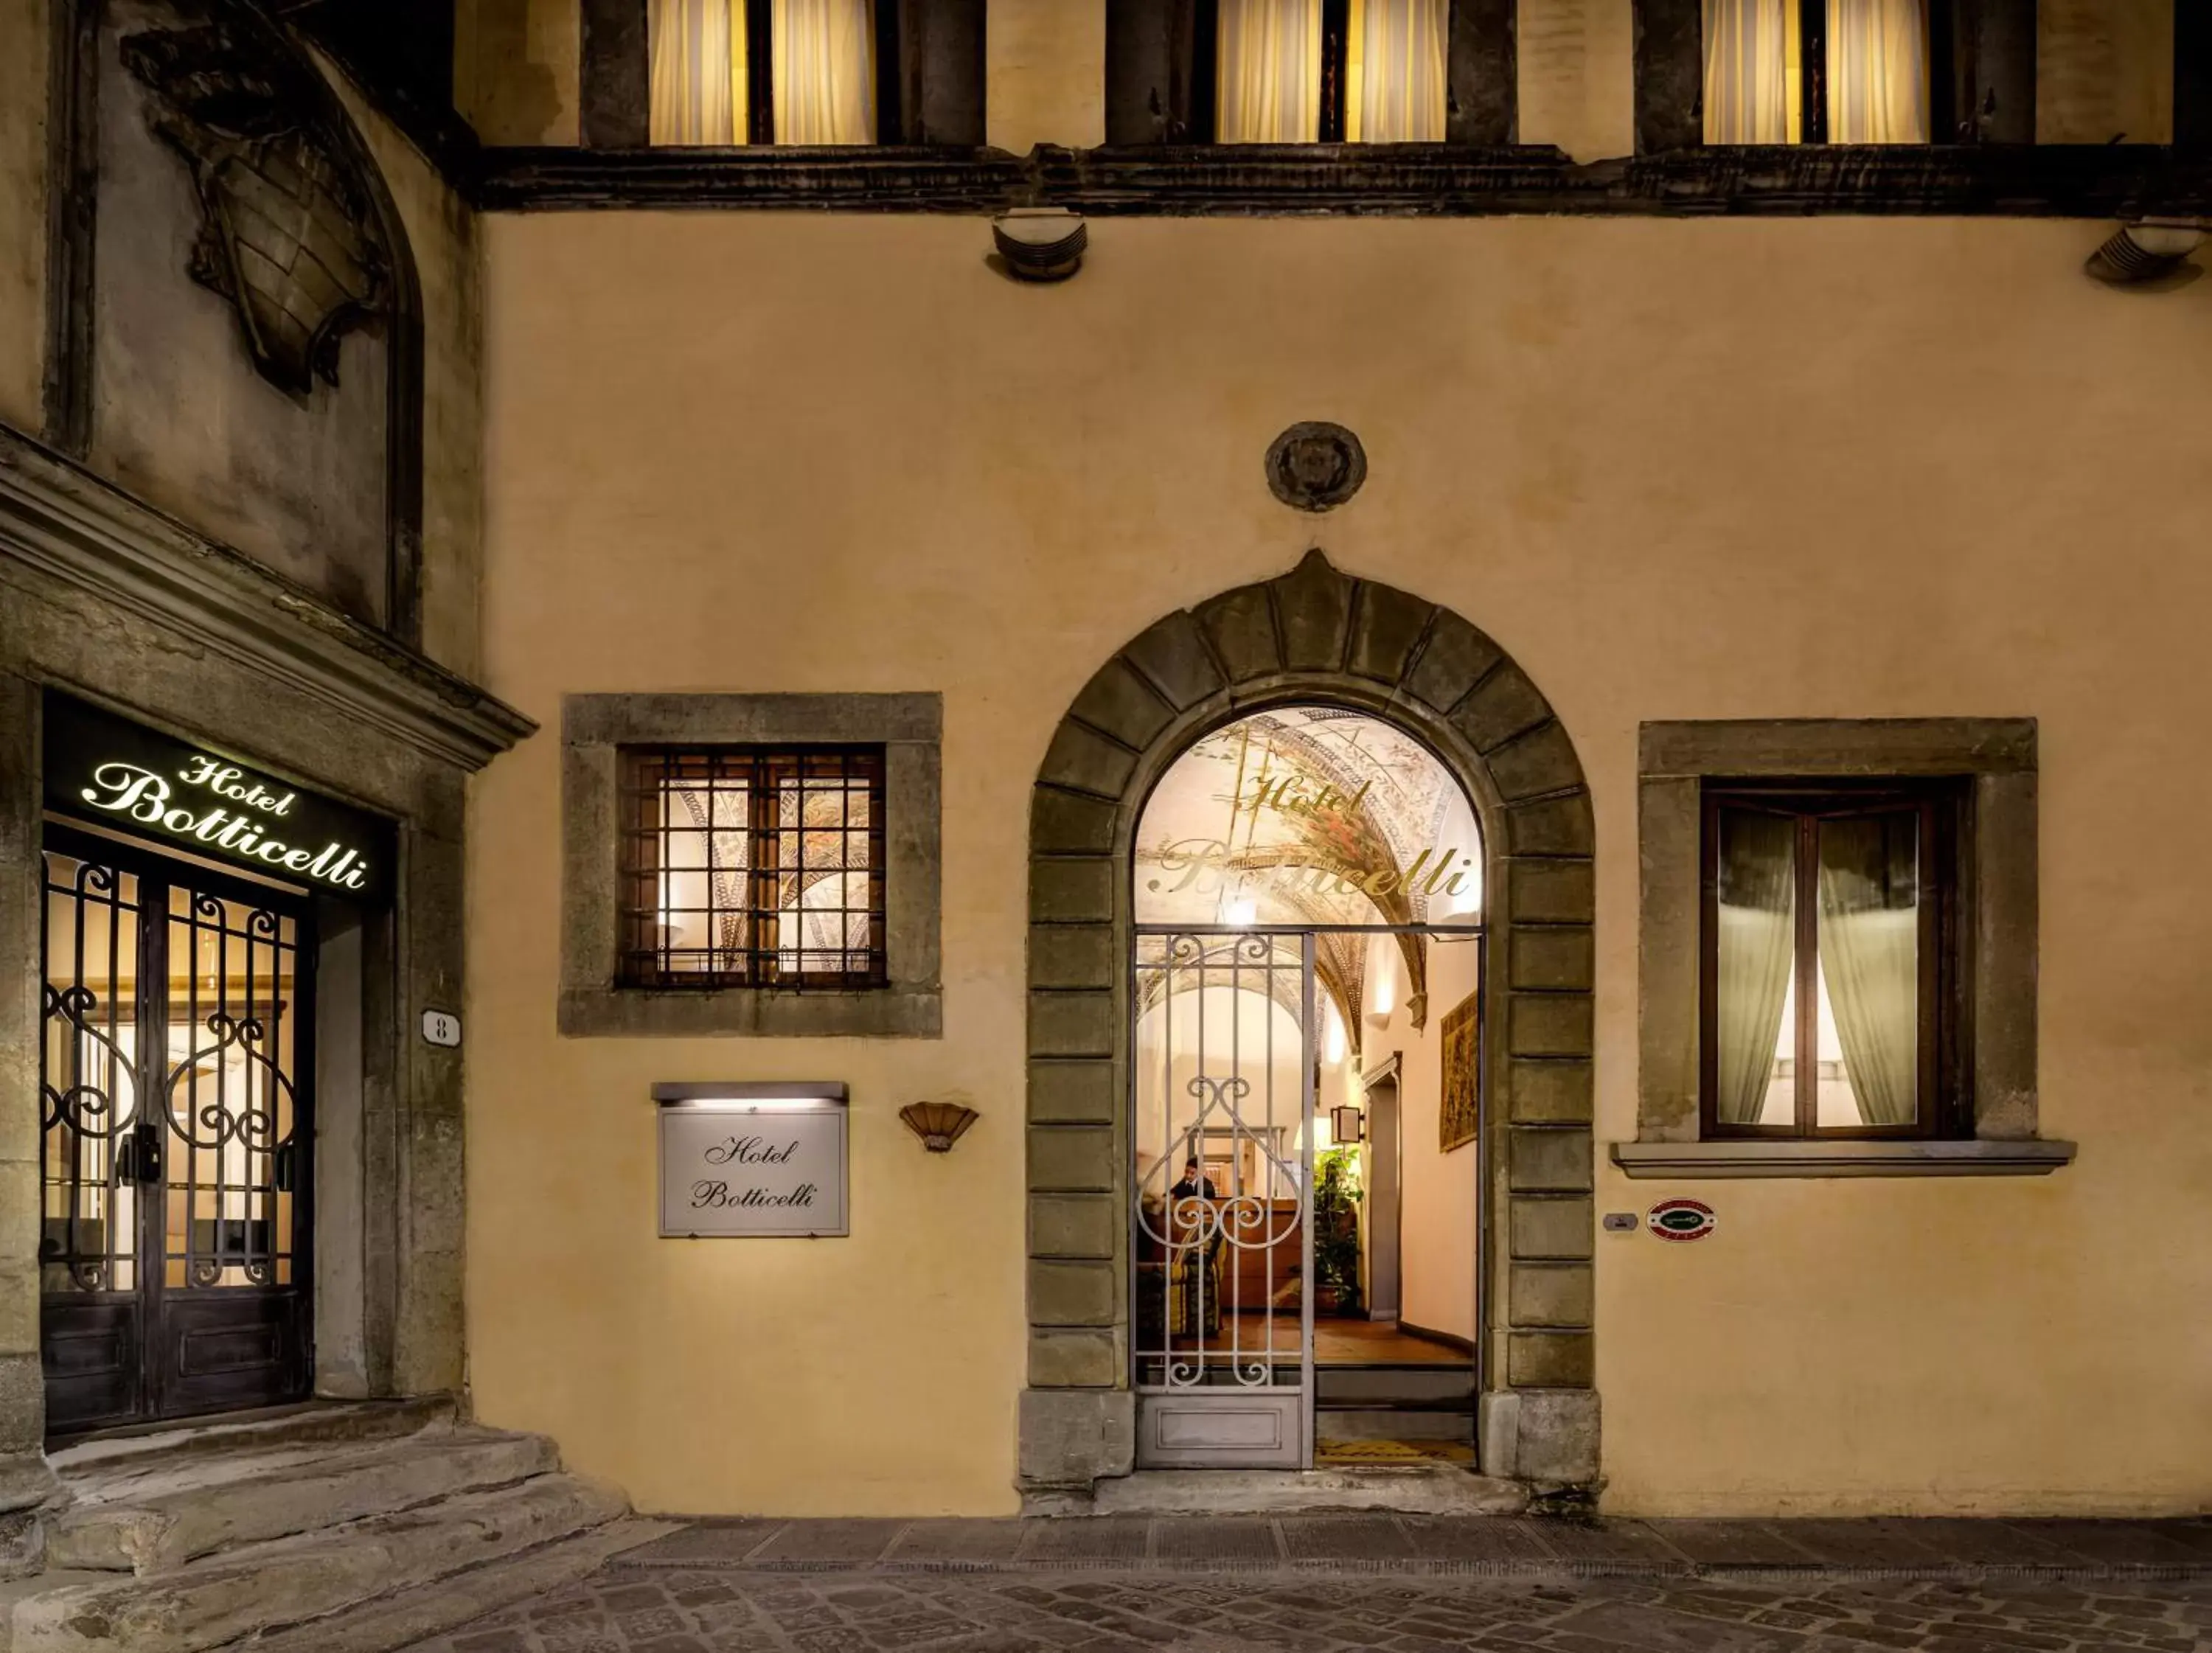 Facade/entrance in Hotel Botticelli